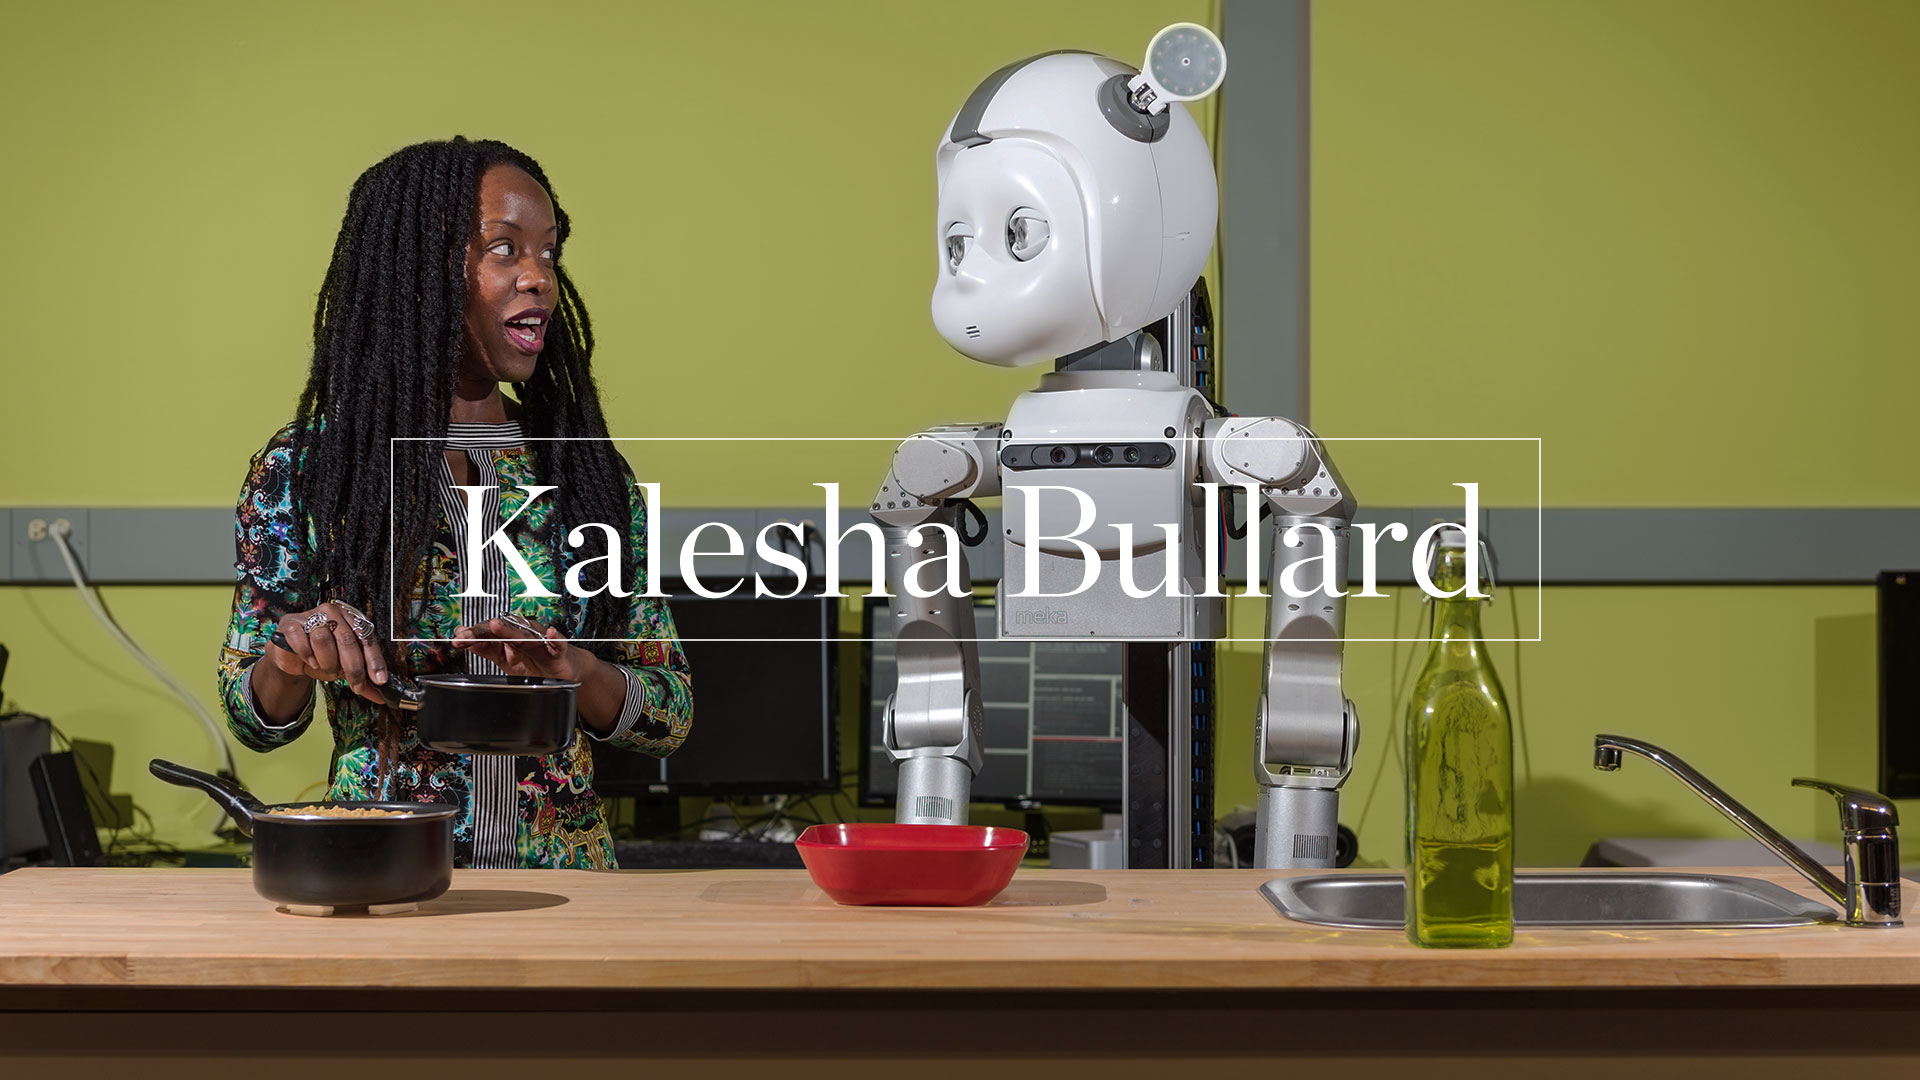 photo -  Kalesha Bullard in kitchen setting looking at robot